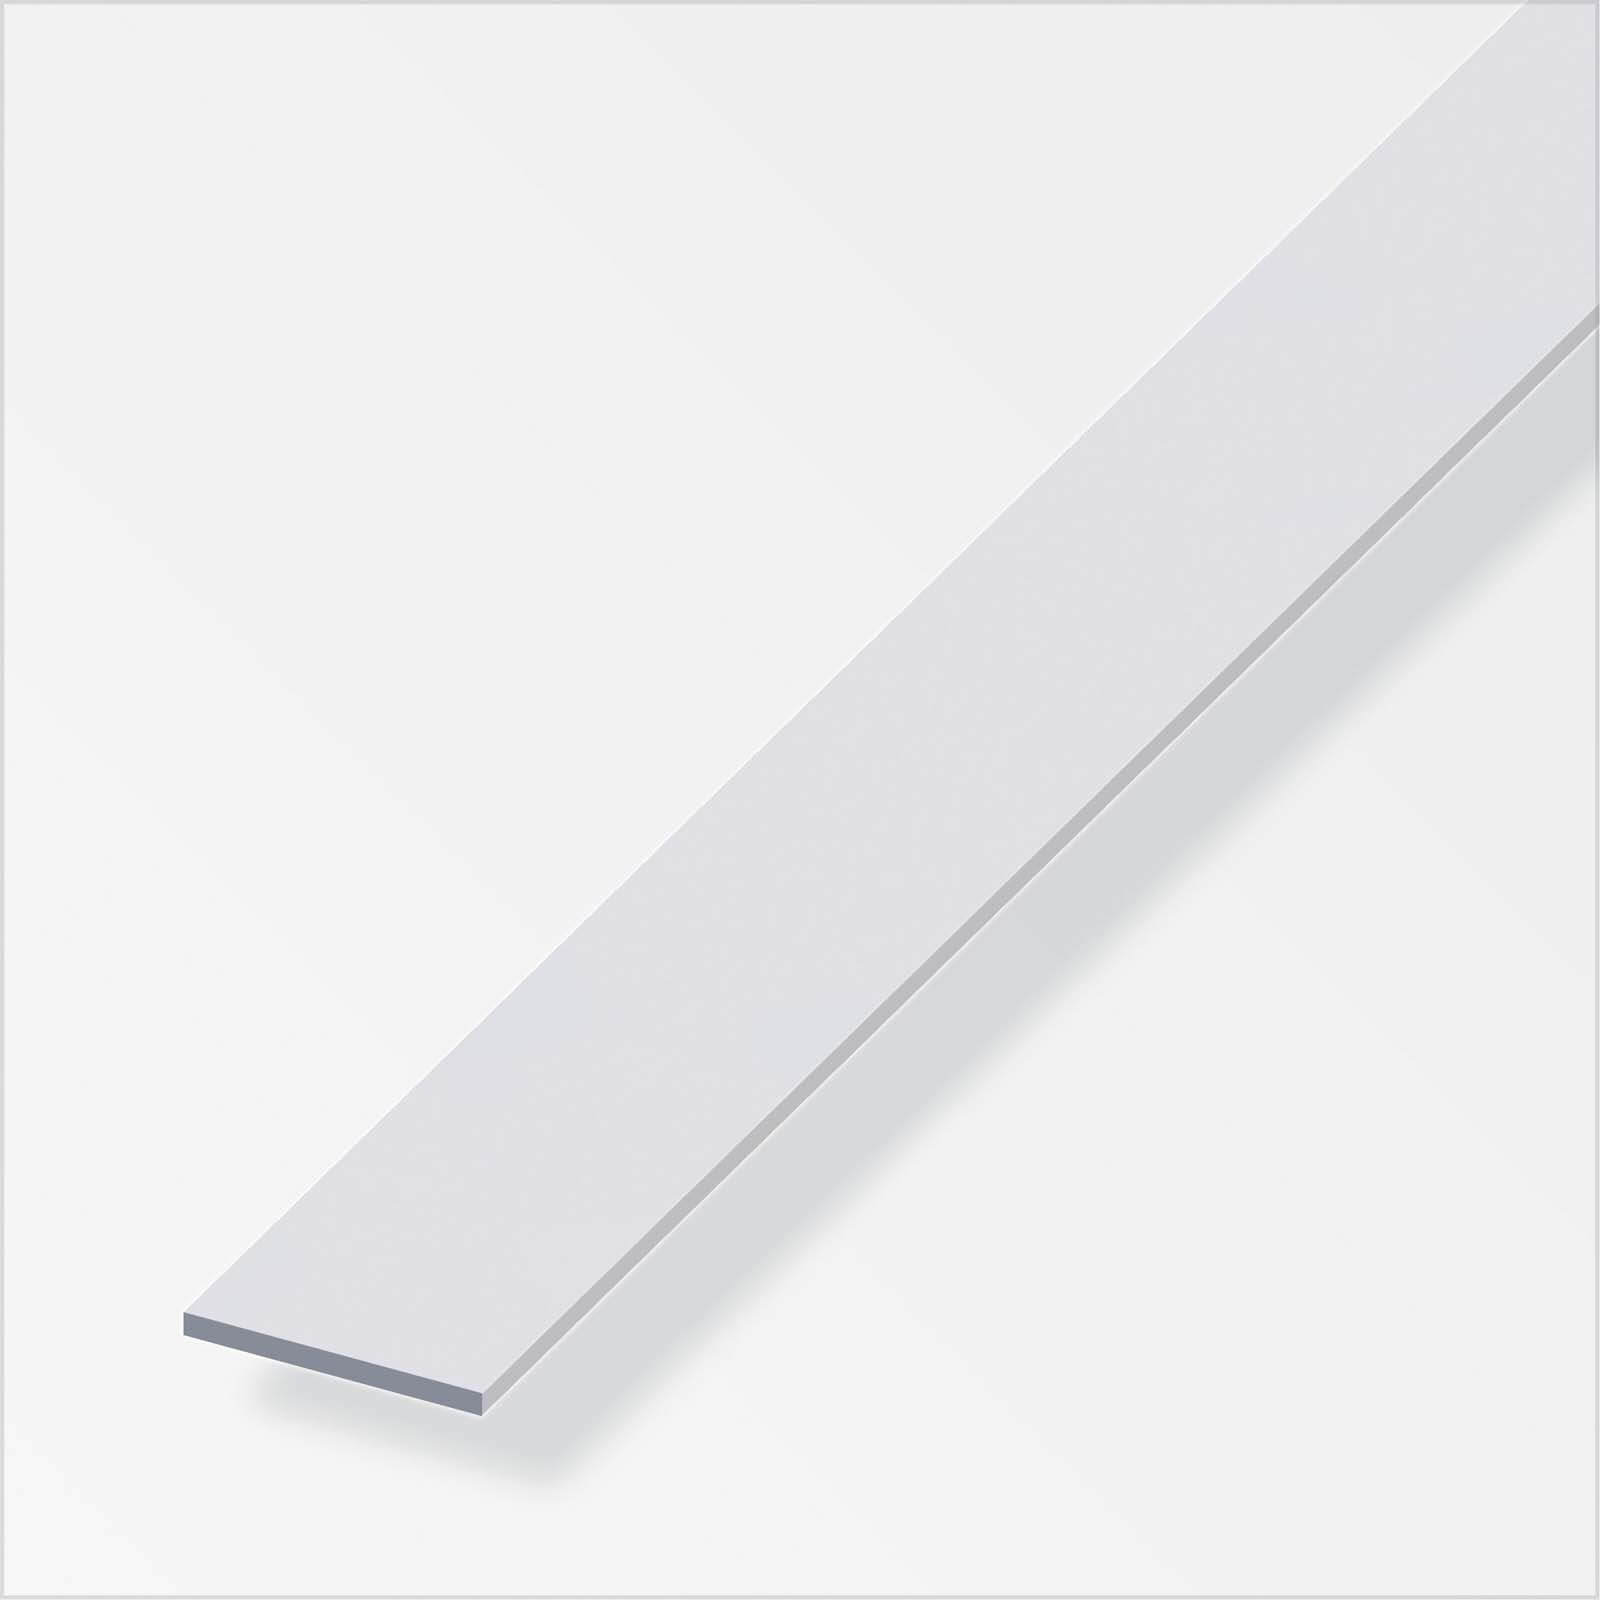 Photo of Anodised Aluminium Flat Bar Profile - 1m X 30mm